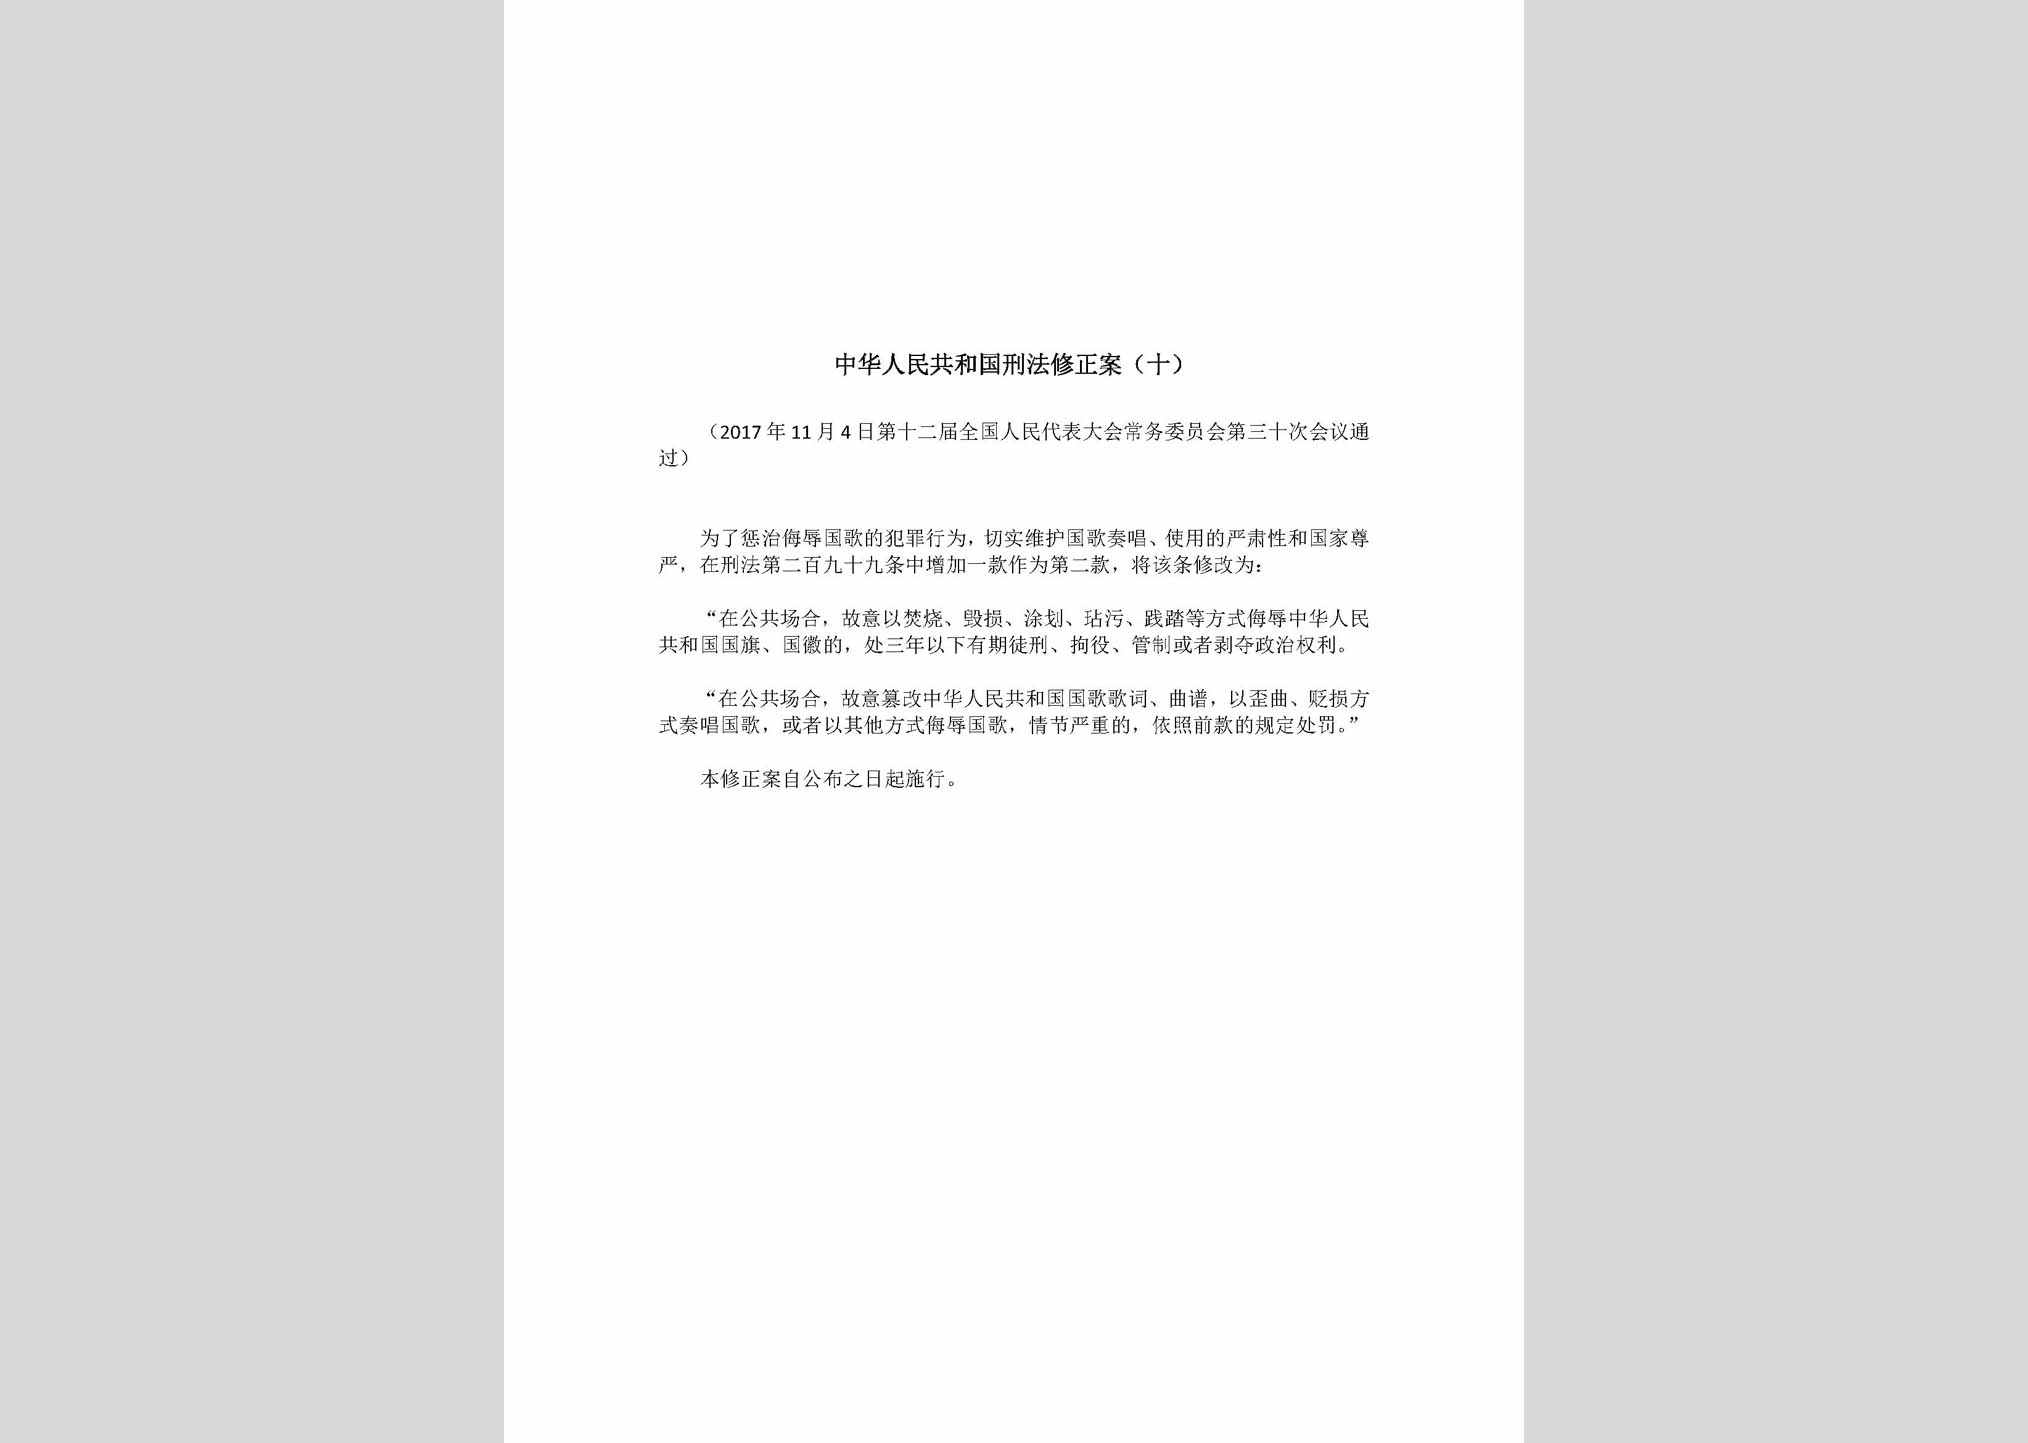 XFXZ-10-2017：中华人民共和国刑法修正案(十)